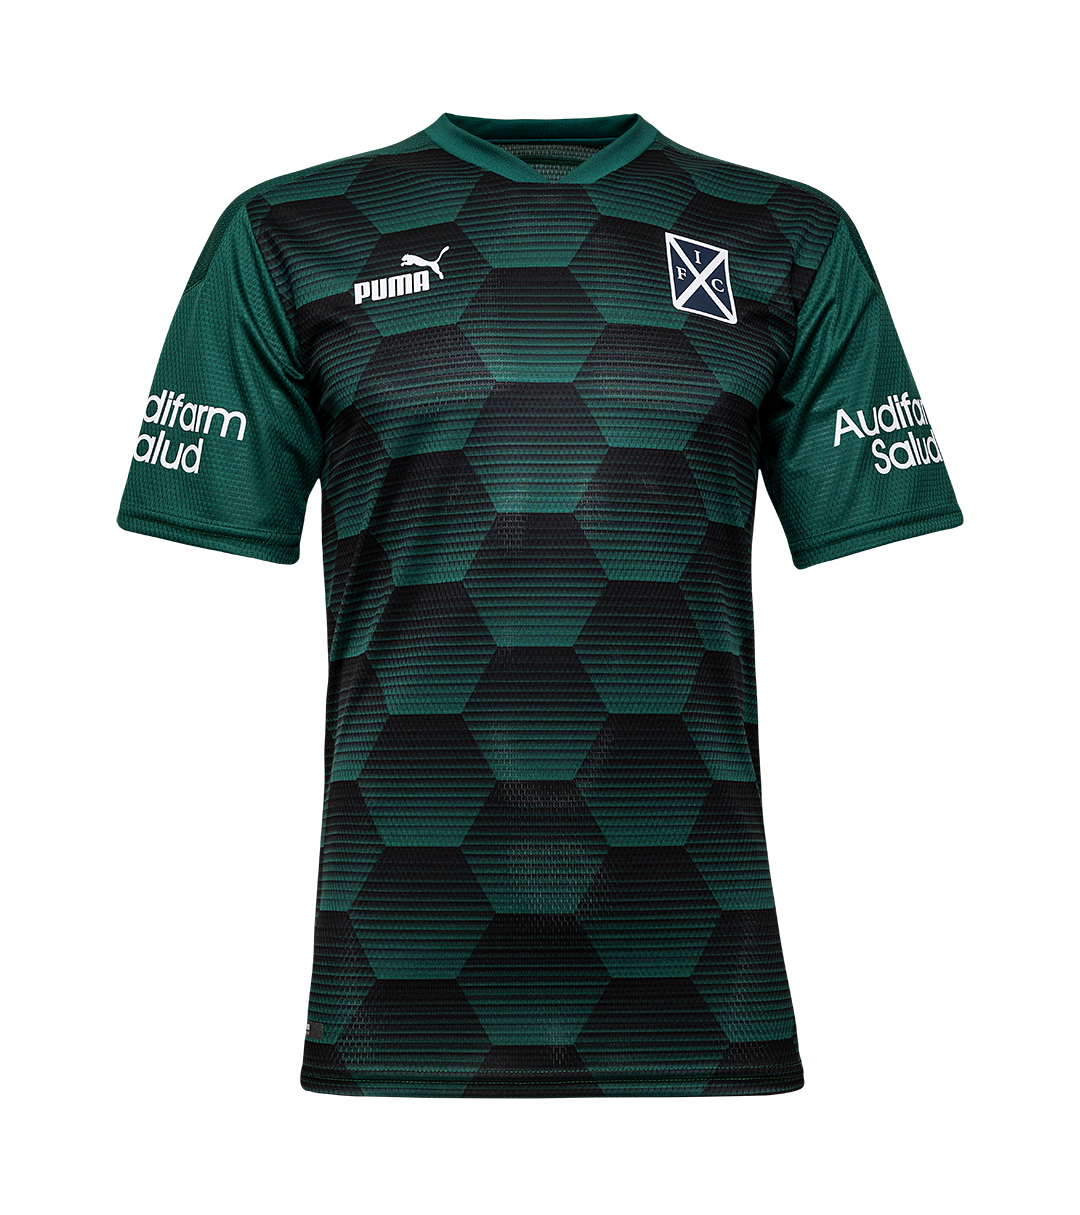 Camisetas PUMA de Independiente 2021 Arquero Verde